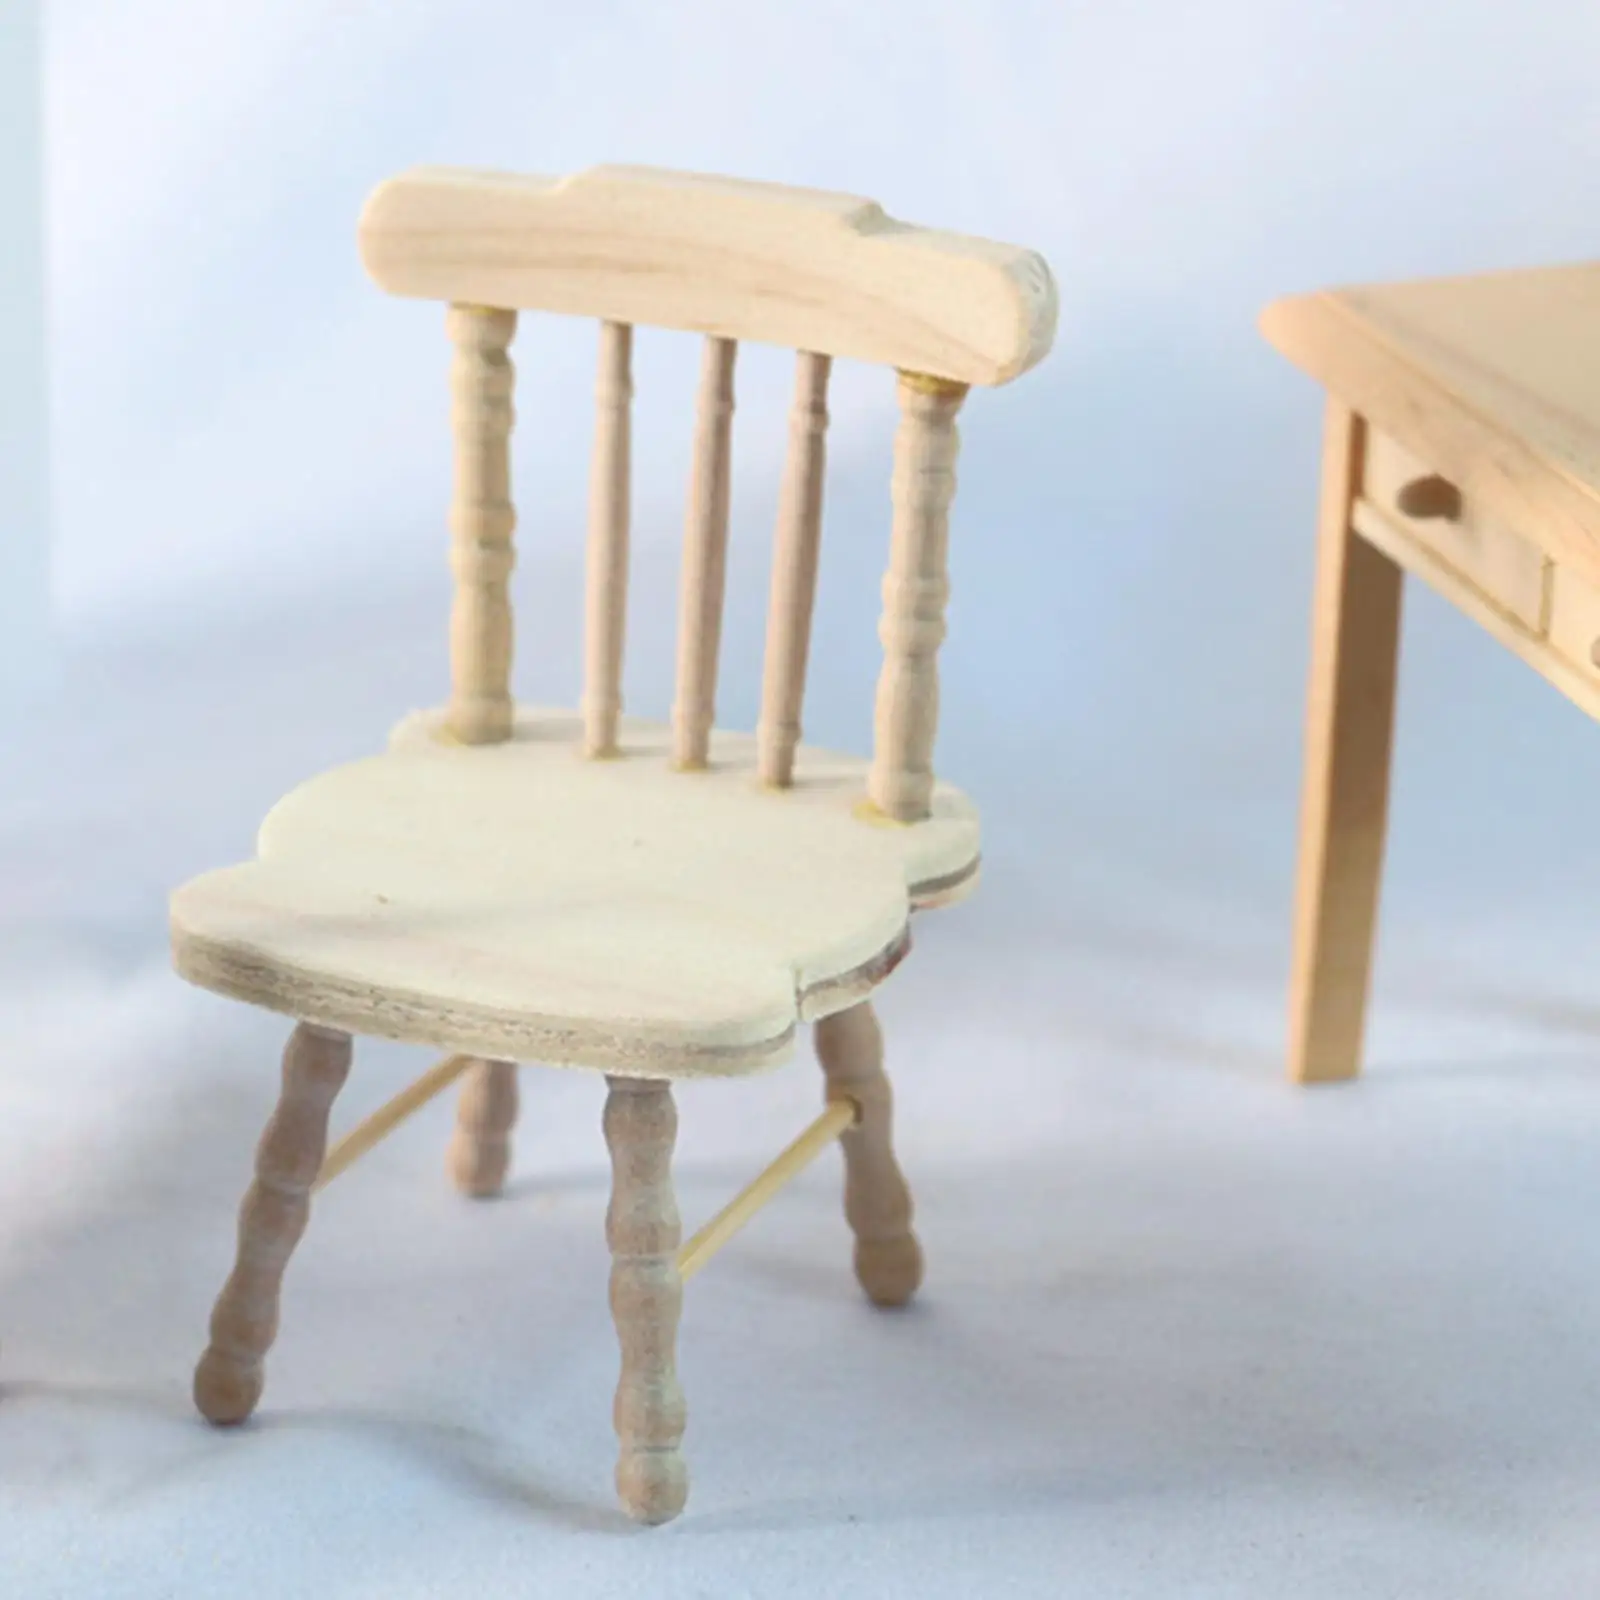 1:6 Dollhouse Furniture Accessories, Chair Handmade DIY 1:12 Toys for Xmas